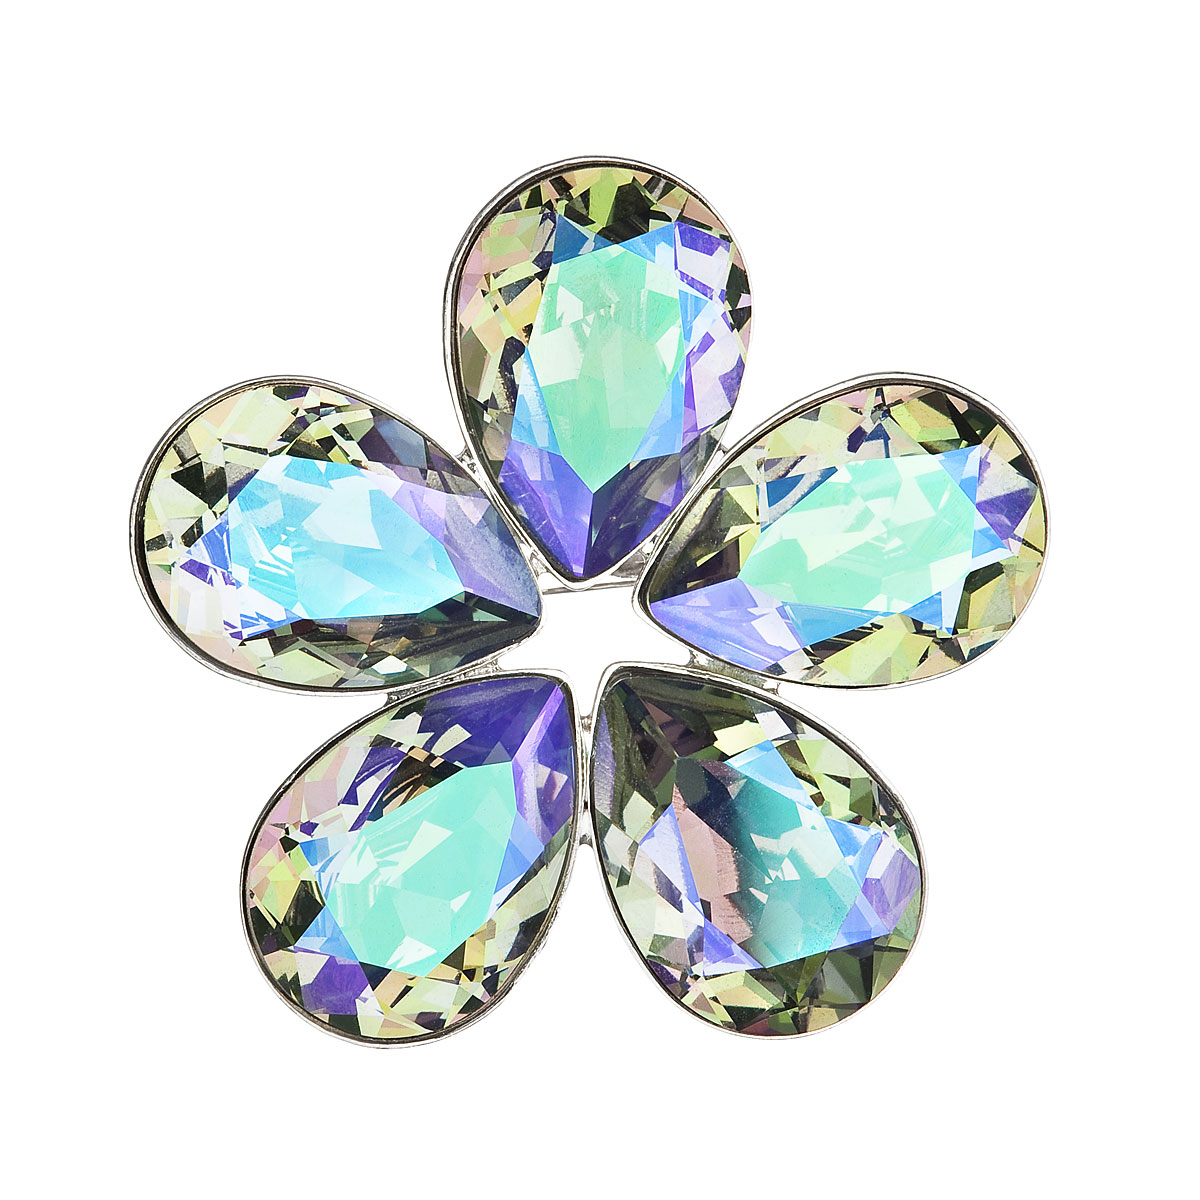 Brož bižuterie se Swarovski krystaly zelená fialová kytička 58003.5 paradise shine